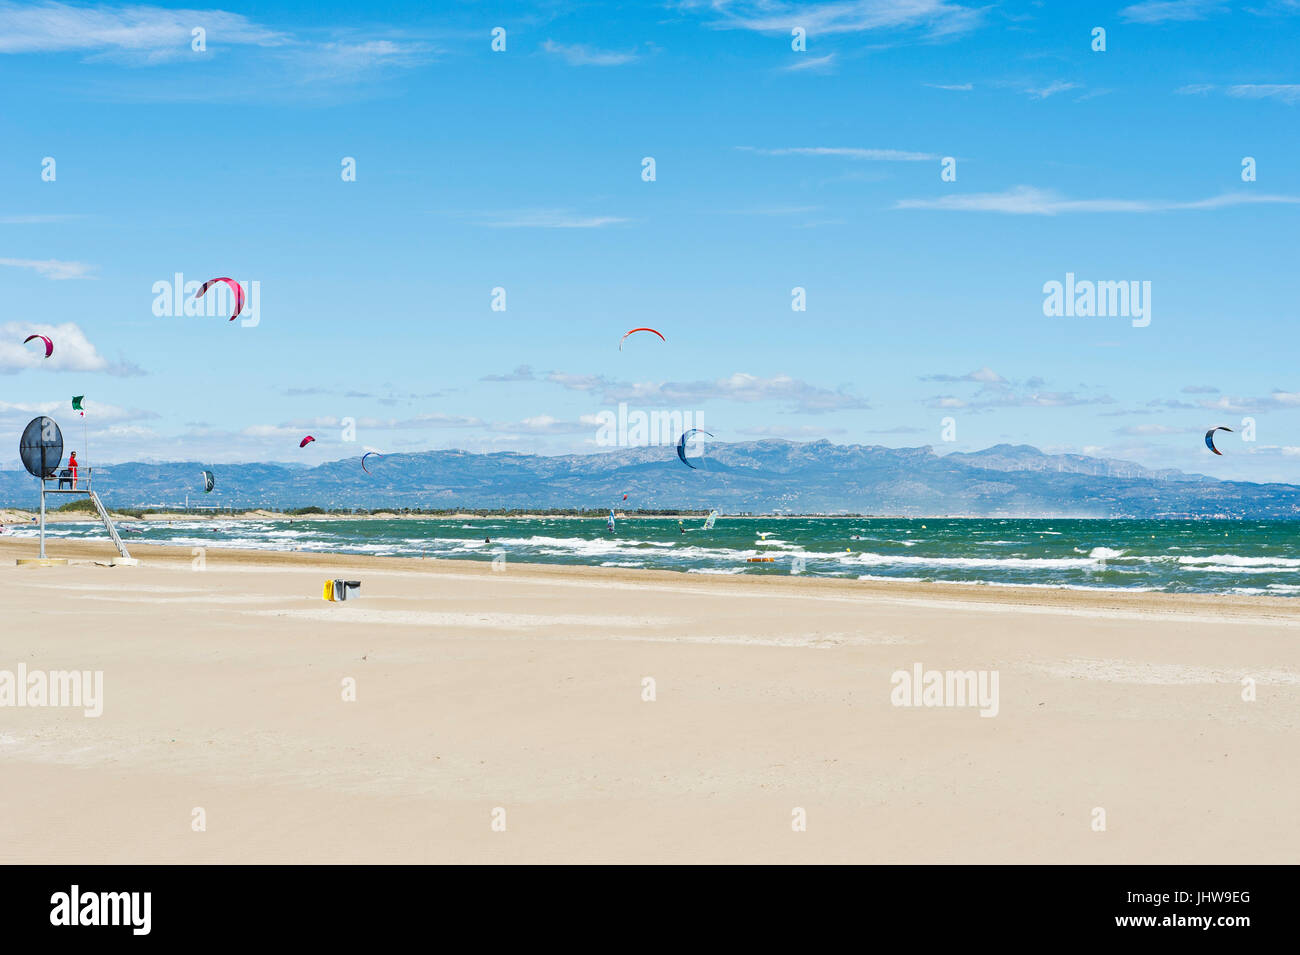 El windsurf y el kitesurf off Riumar Deltebre, playa, cerca del Parc Natural del Delta de l'Ebre, Castellón, España oriental Foto de stock